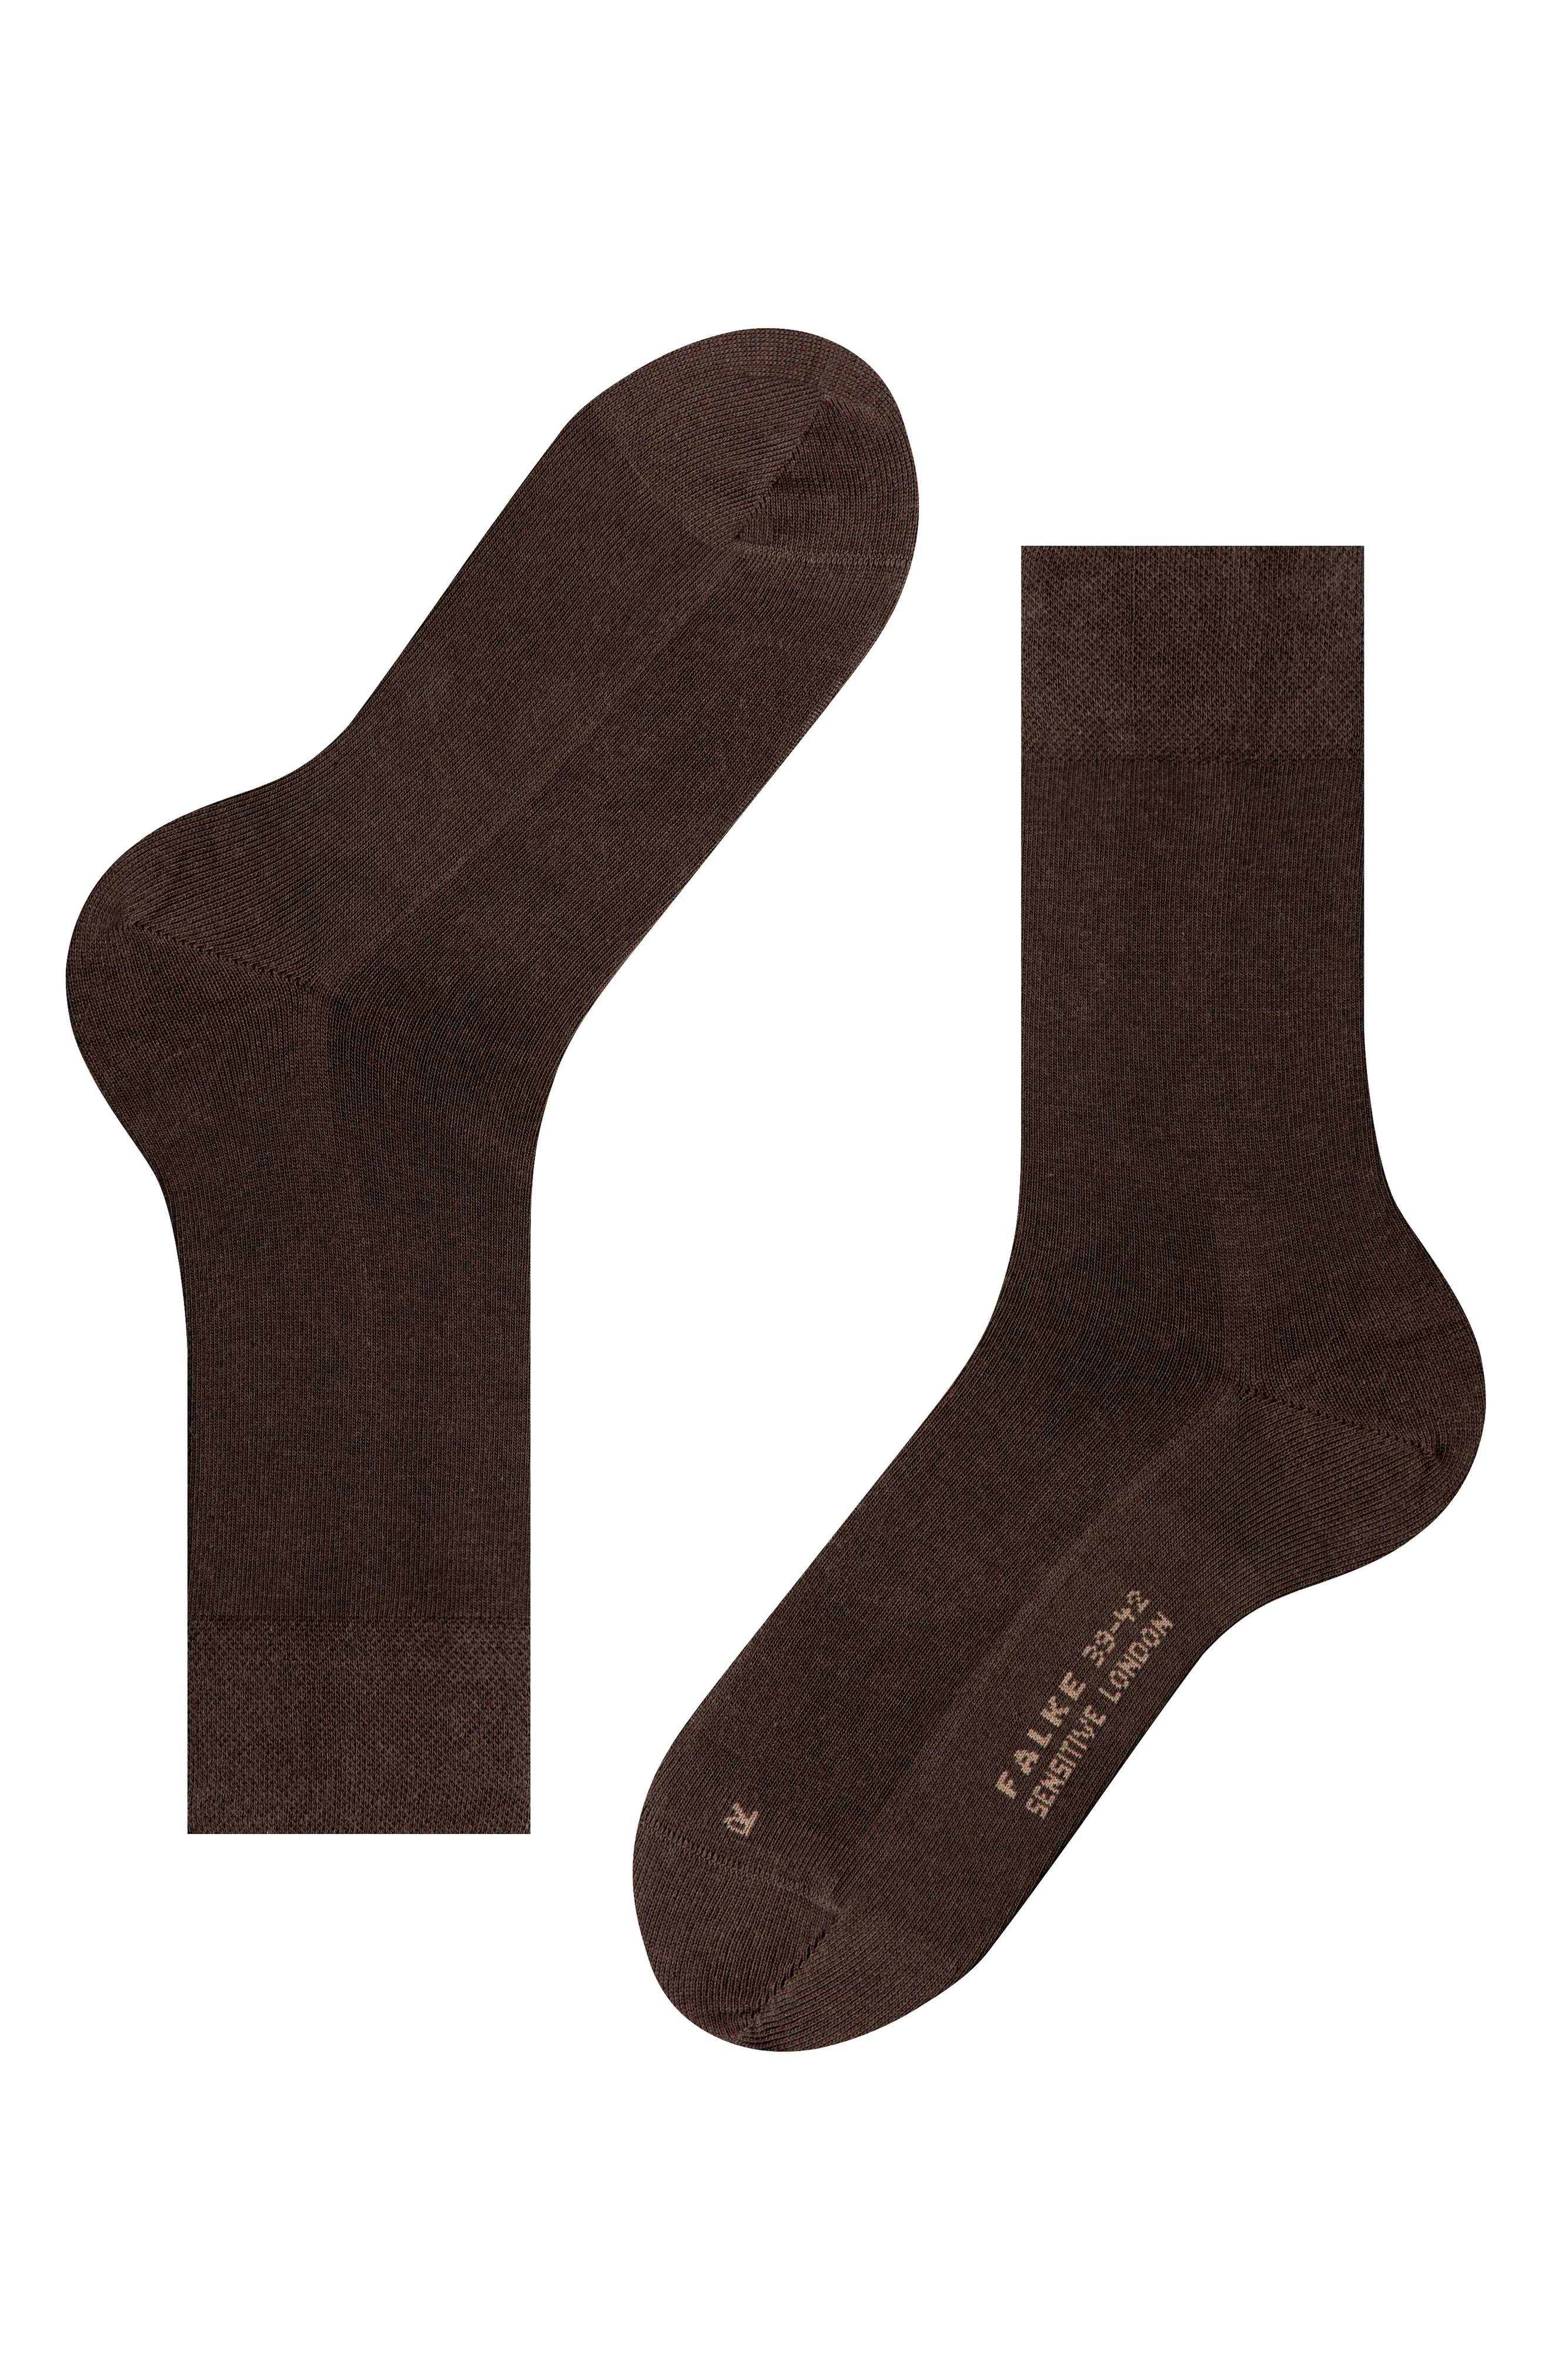 Sensitive London Cotton Blend Socks - 3